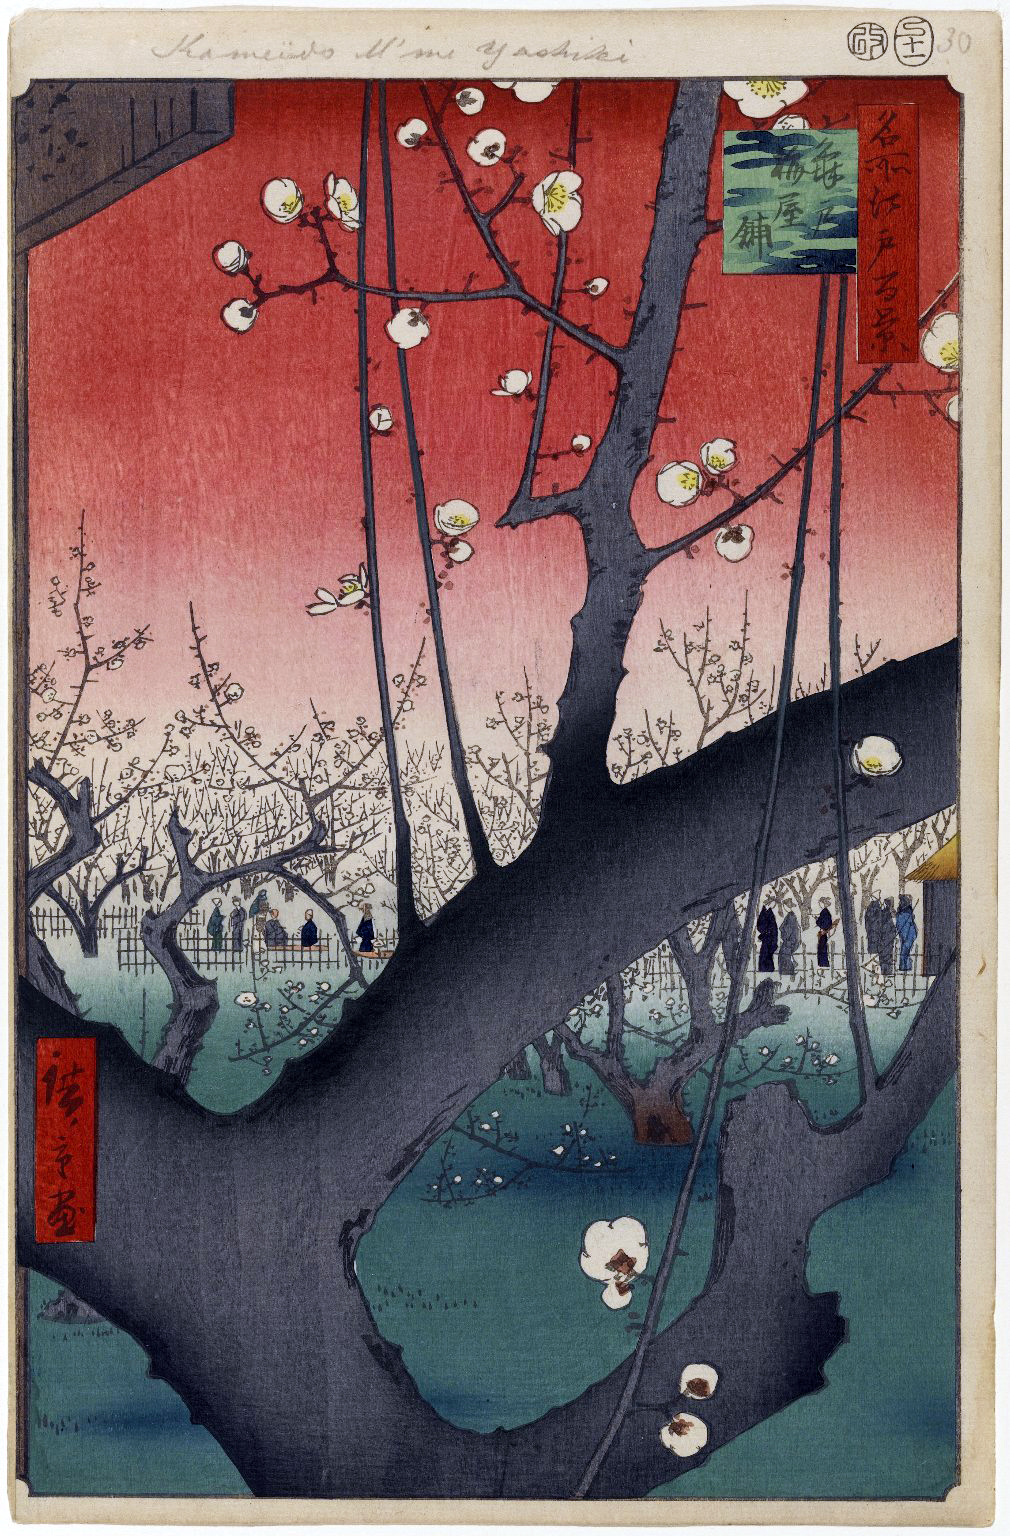 Utagawa Hiroshige, Plum Garden at Kameido, 1857, woodblock print (Brooklyn Museum)